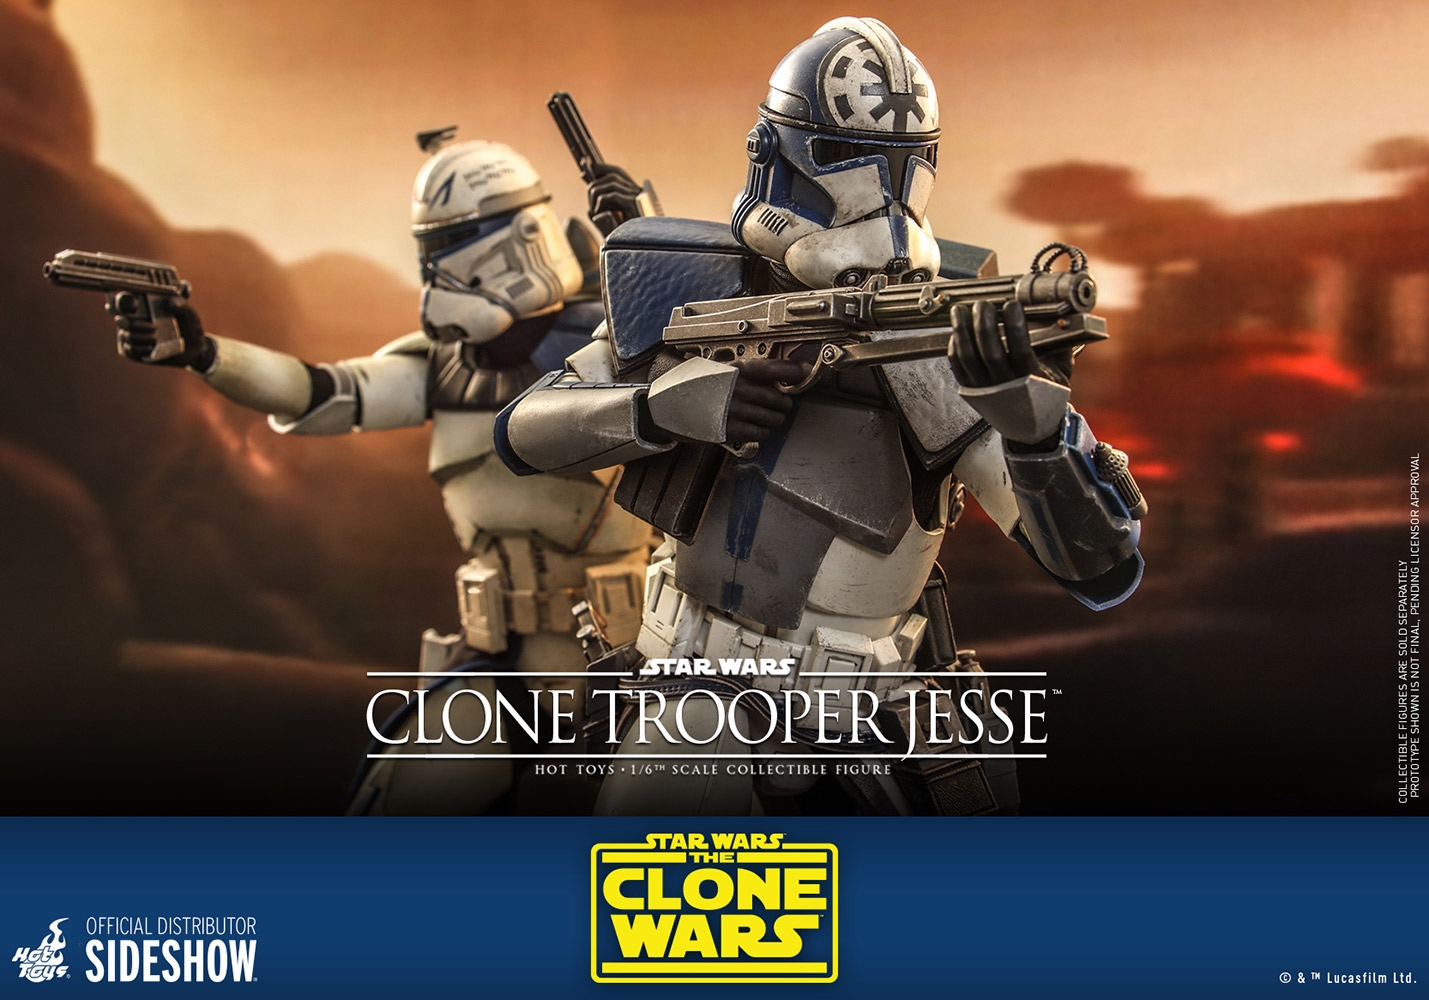 clone-trooper-jesse_star-wars_gallery_61855d643257e.jpg